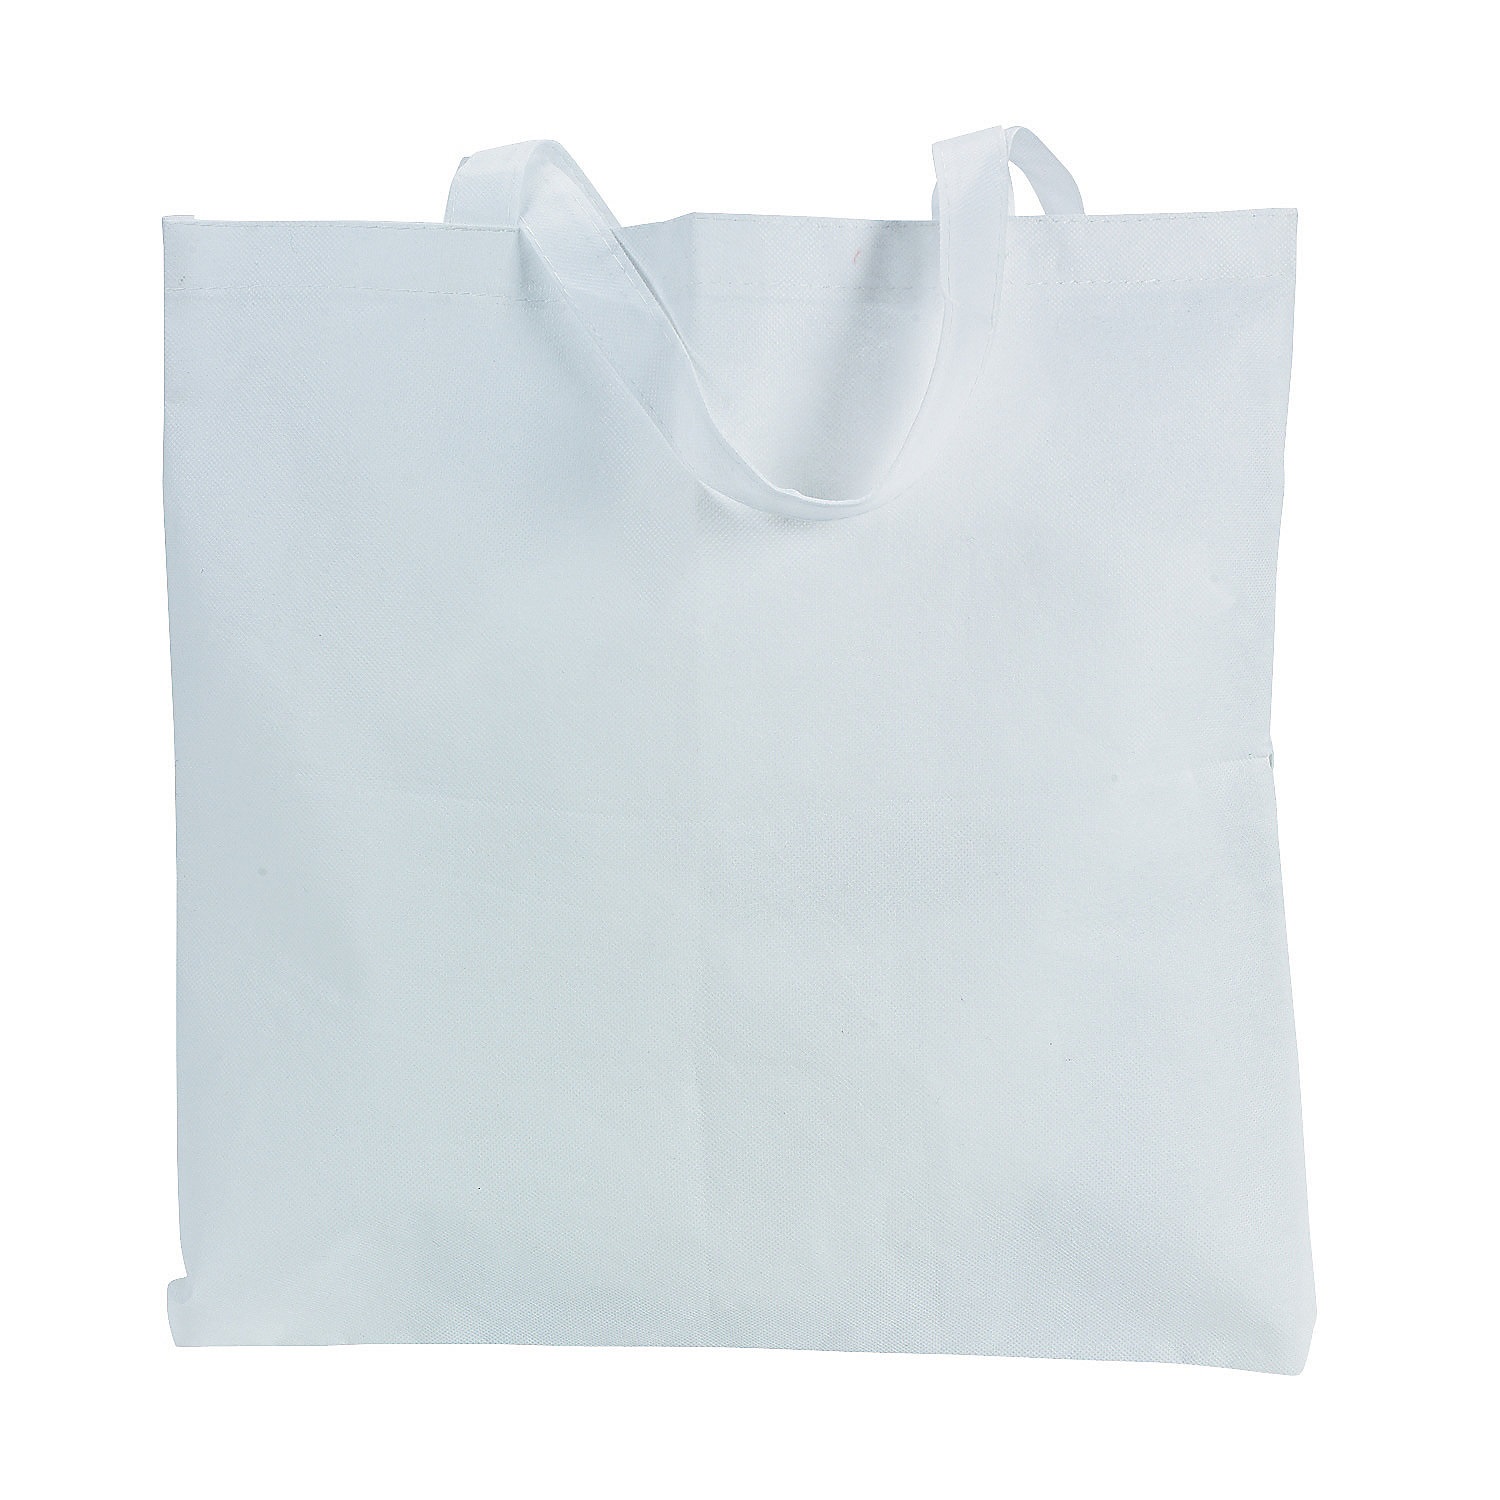 diy-large-white-tote-bags-12-pc-_48_8265